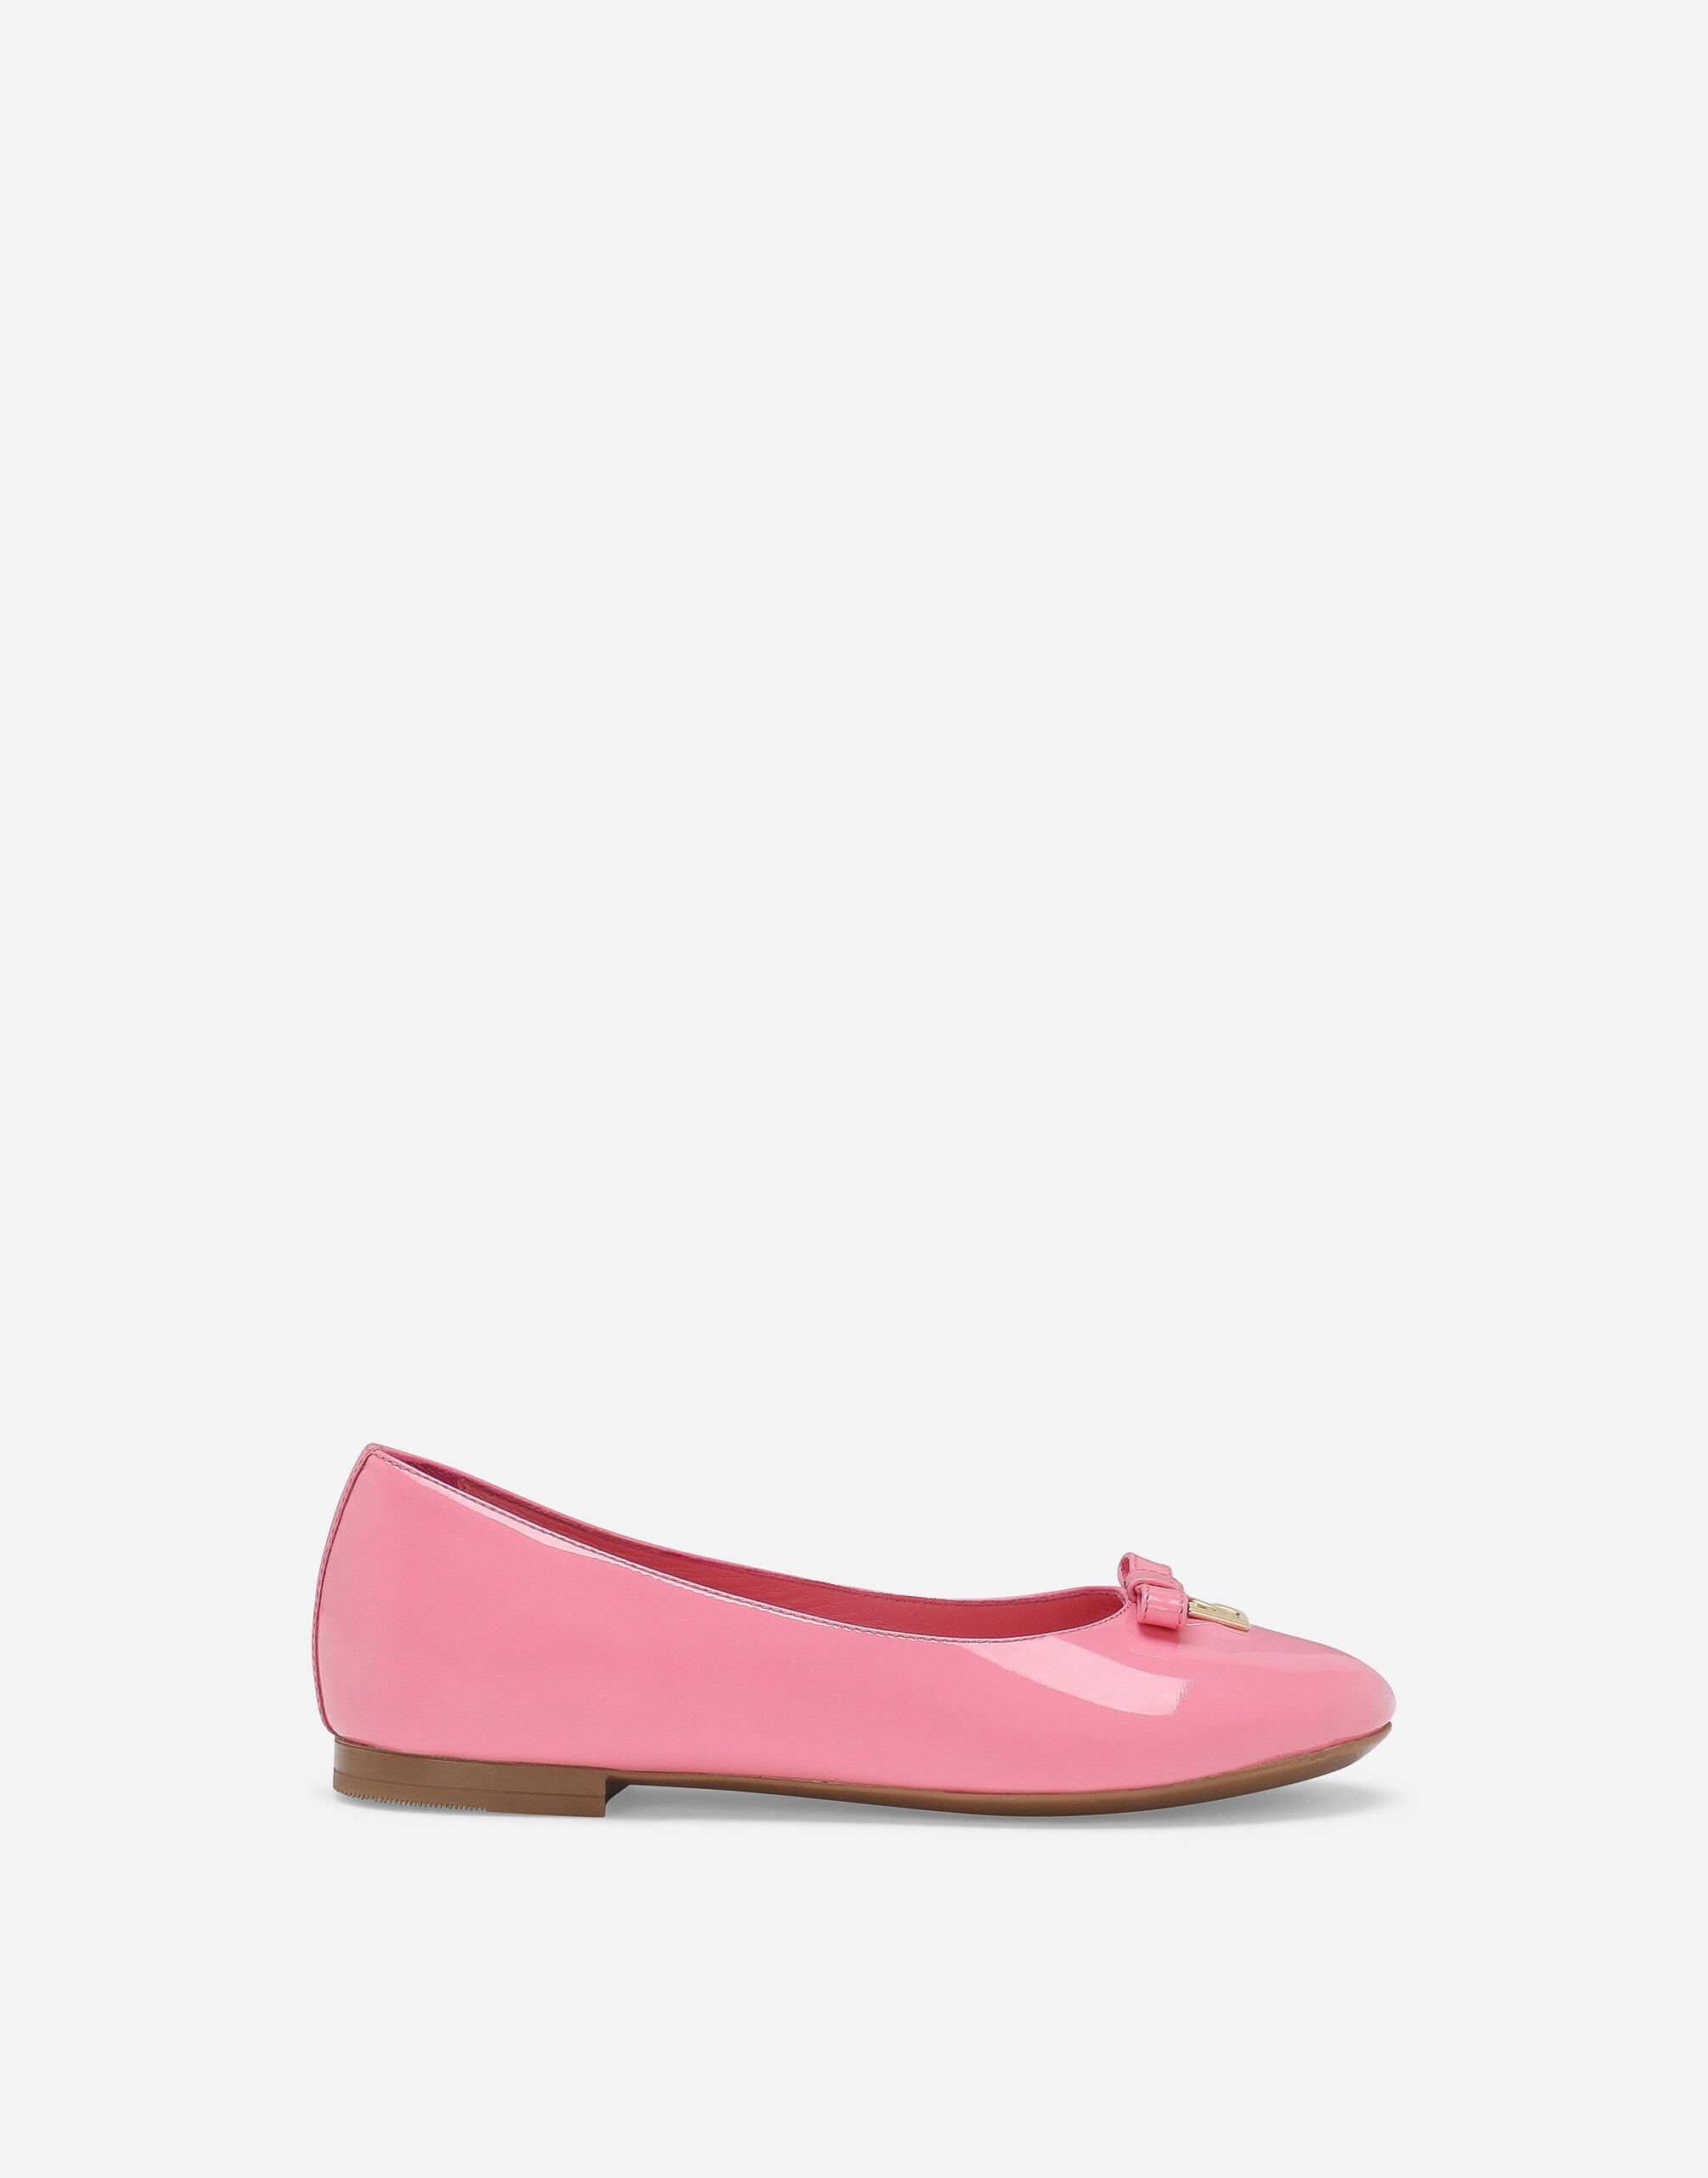 Dolce & Gabbana Patent leather ballet flats Pink EB0248A1471